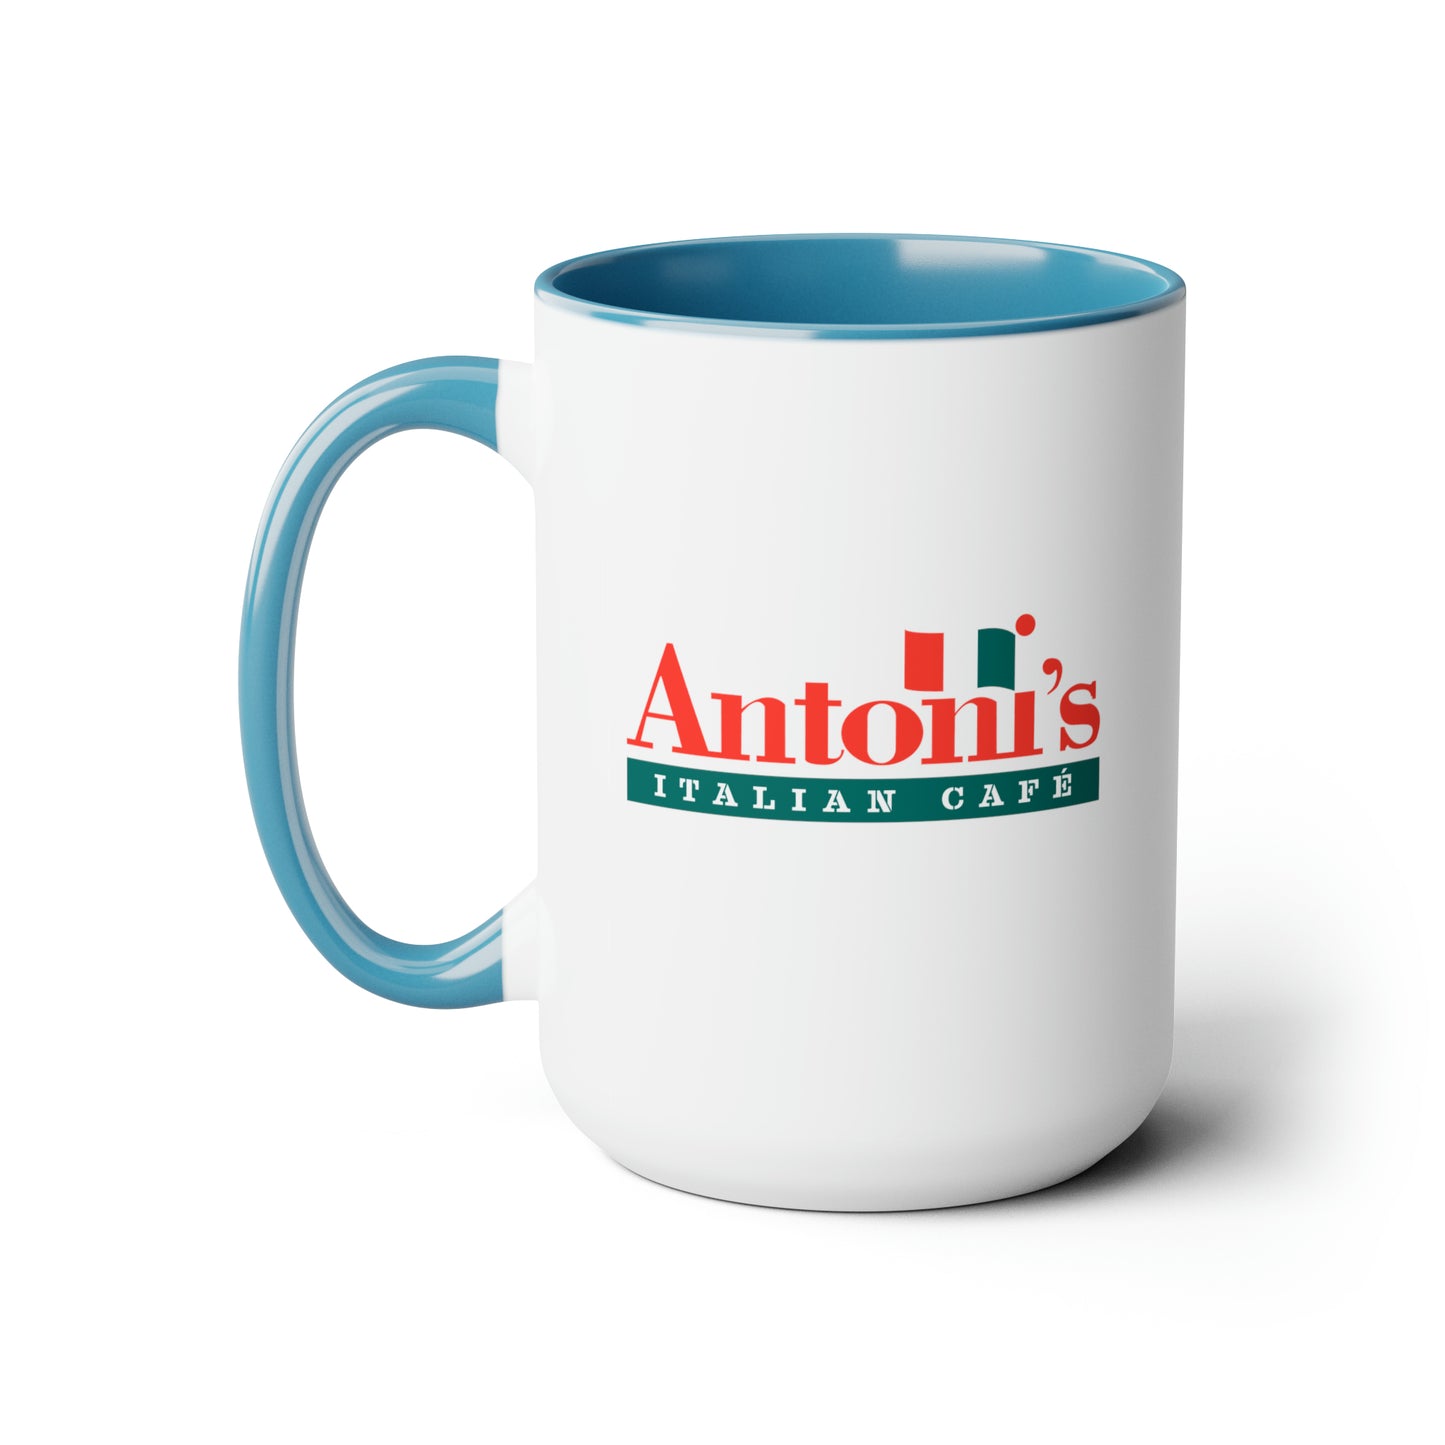 Antoni's Italian Cafe Two-Tone Coffee Mugs, 15oz